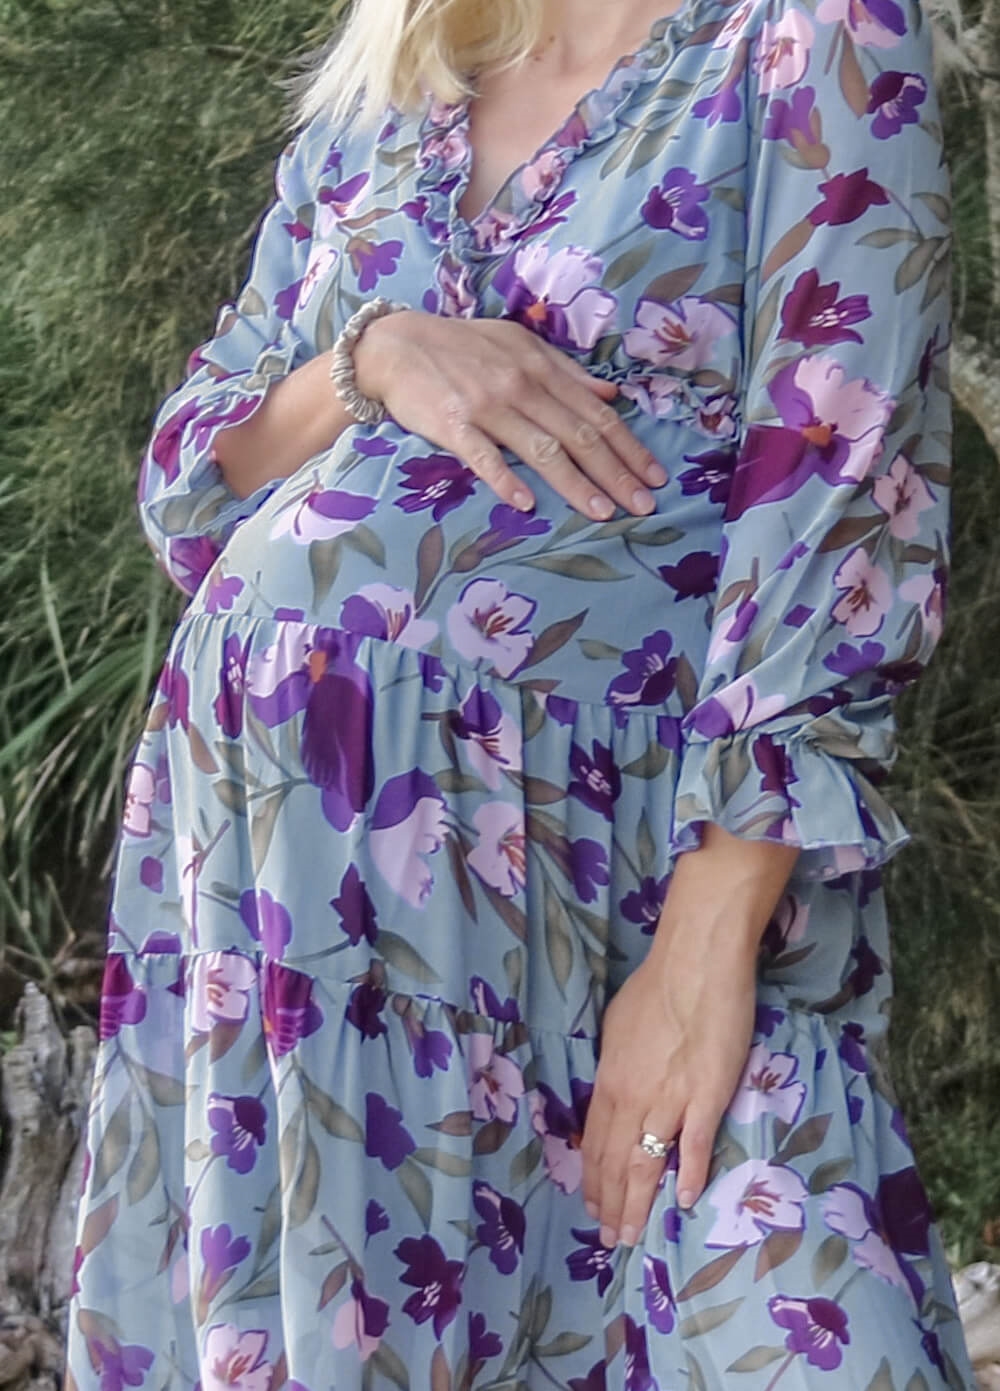 Lait & Co - Wanderlust Maternity Maxi Gown in Blue/Purple Floral